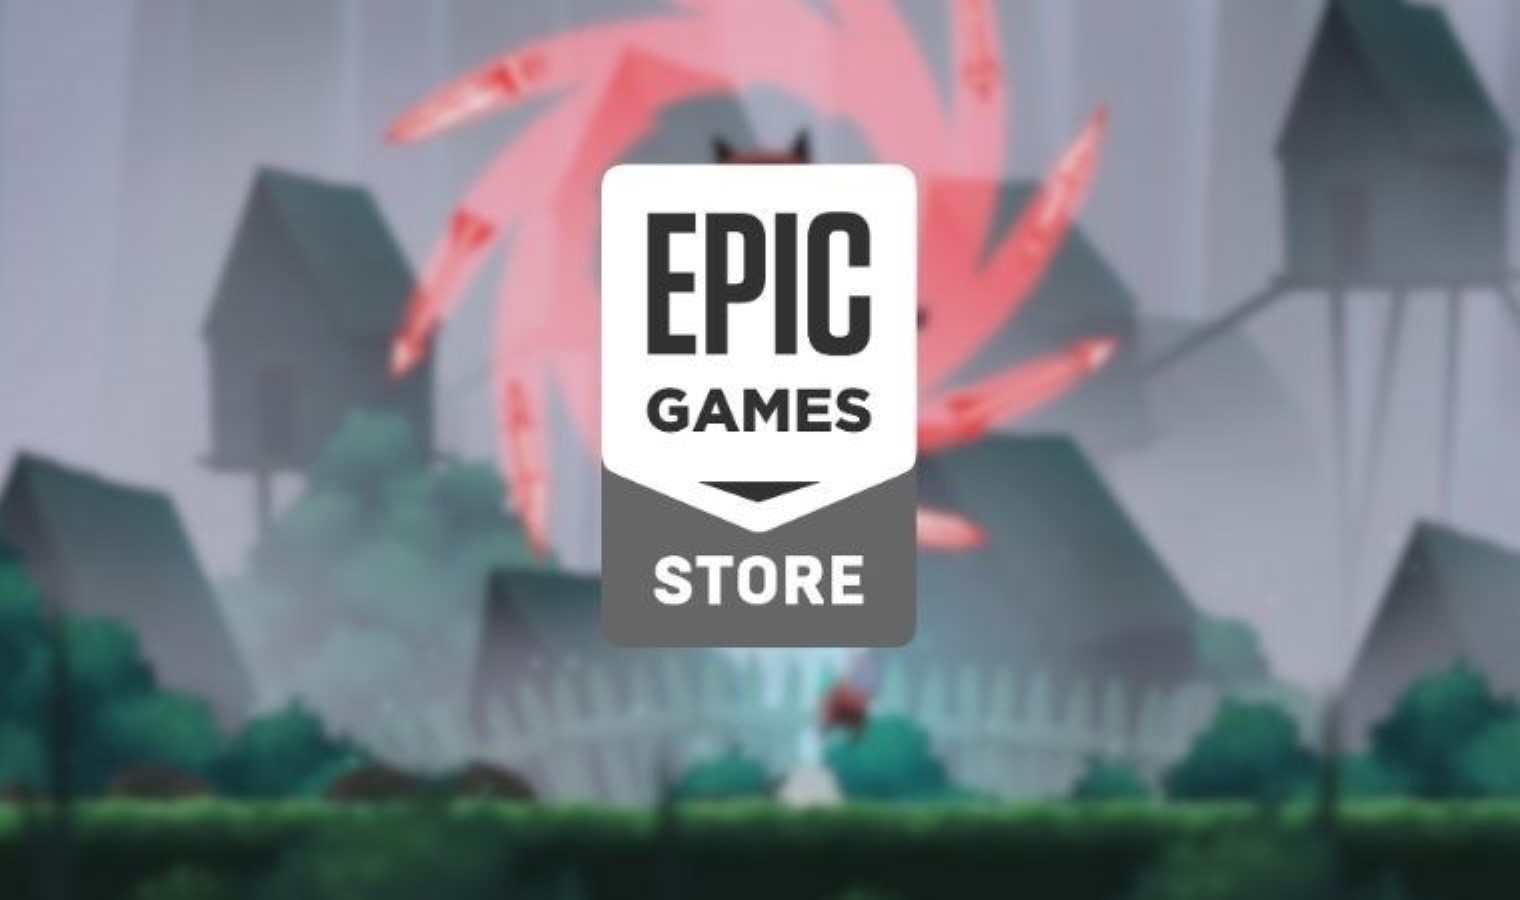 Epic Games 免费赠送游戏至 4 月 4 日 - Last Minute 科技新闻